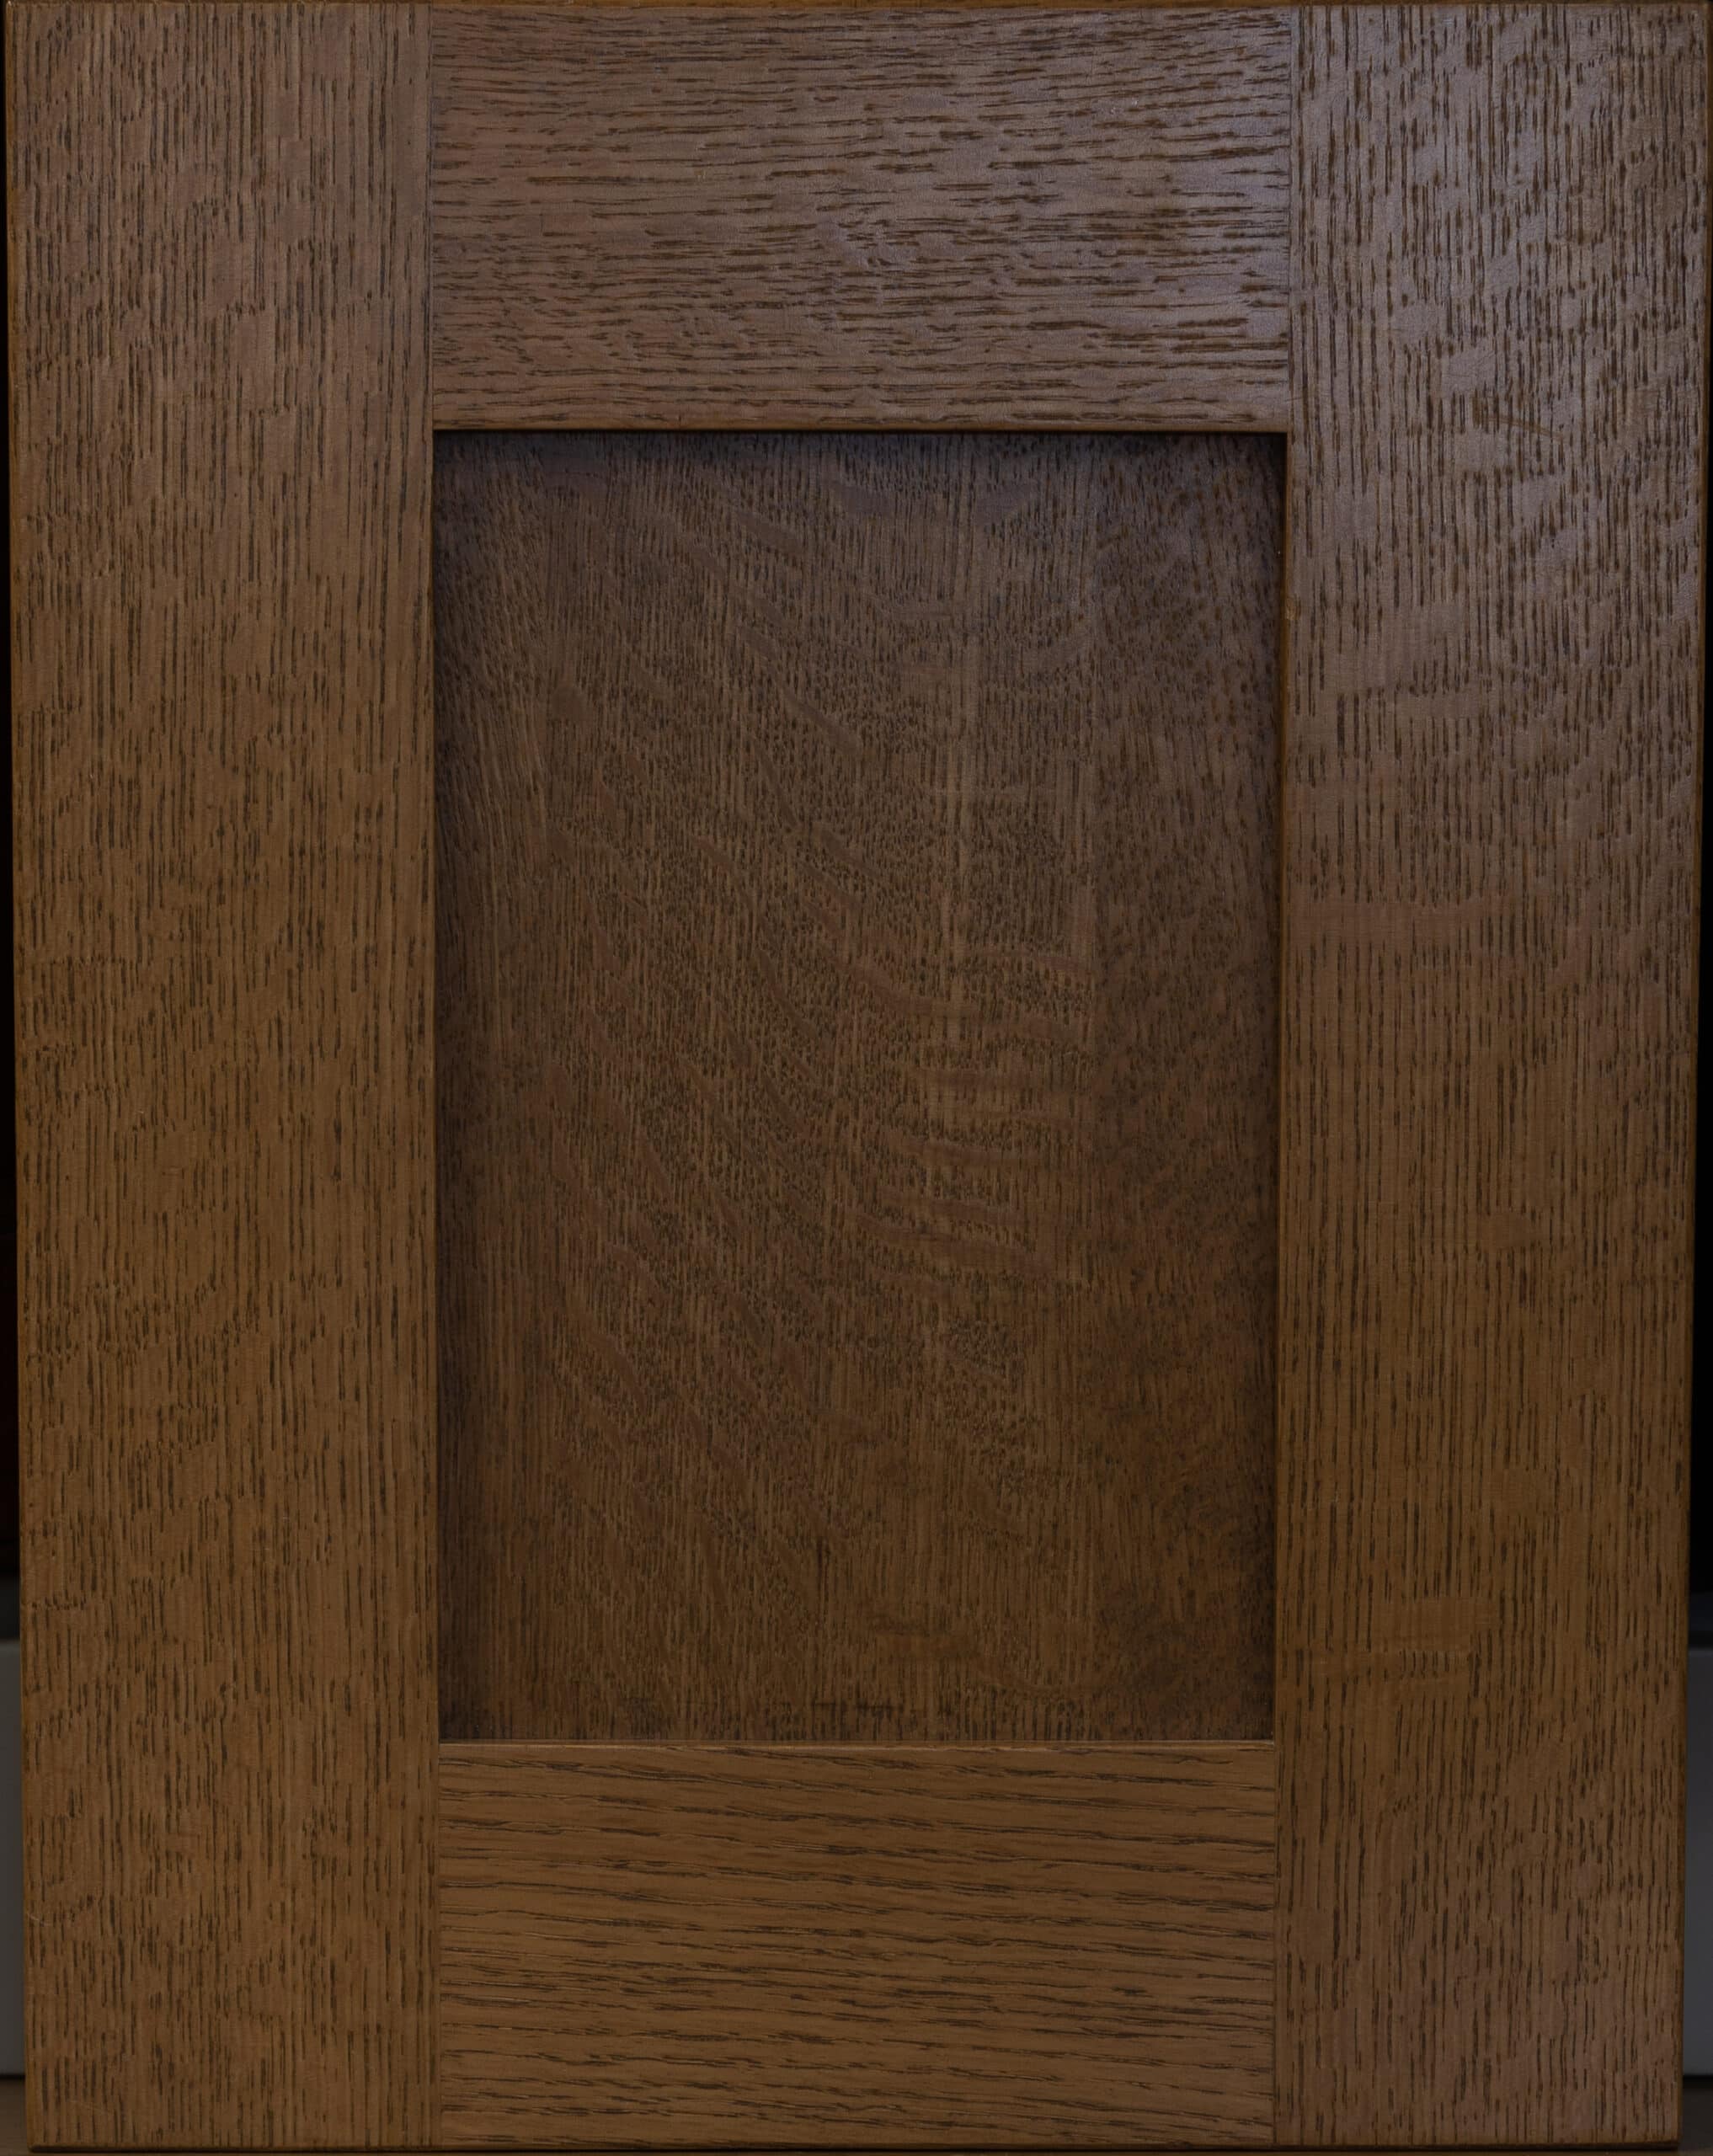 Custom oak kitchen cabinet doors